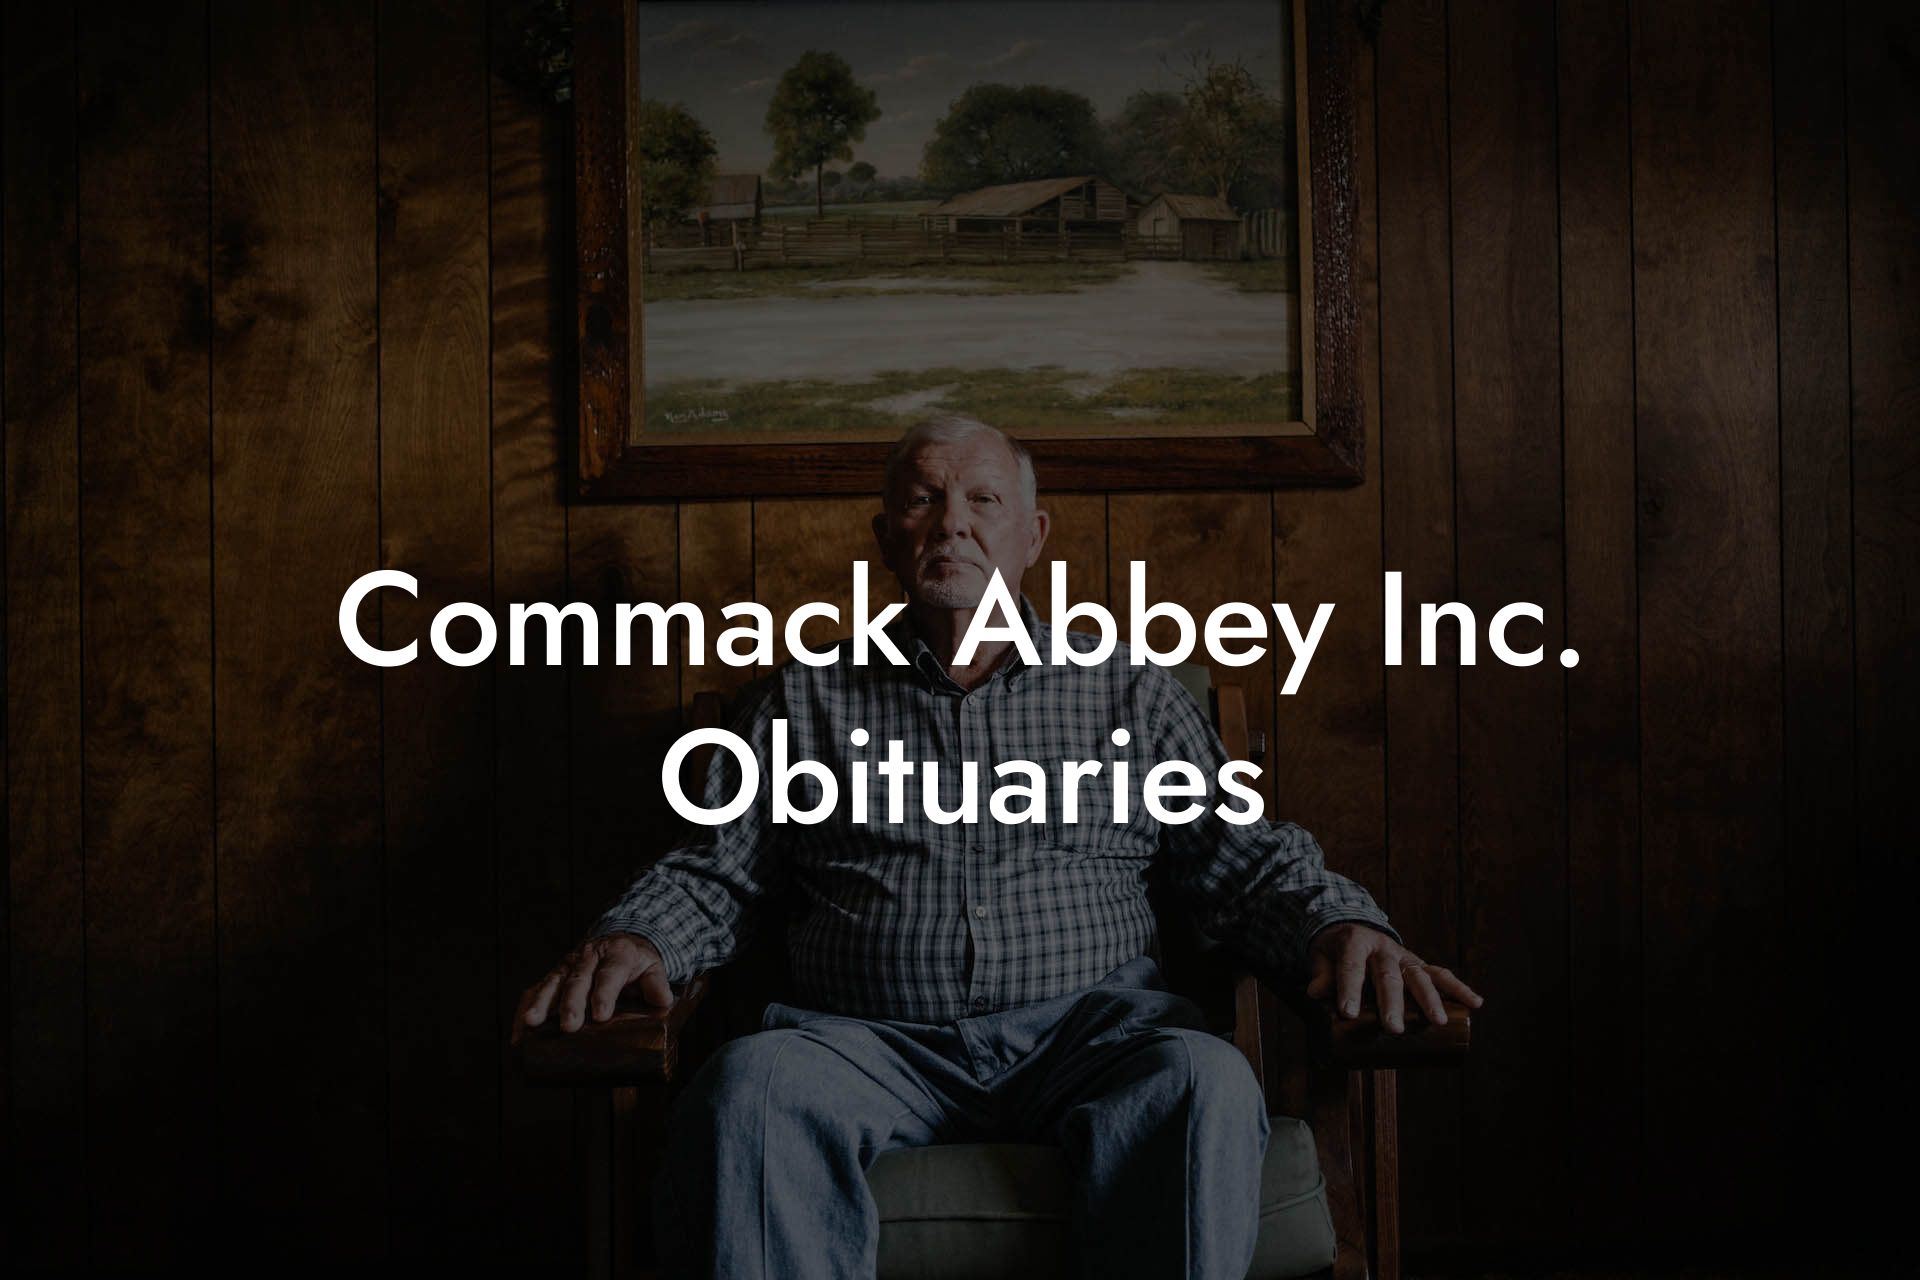 Commack Abbey Inc. Obituaries